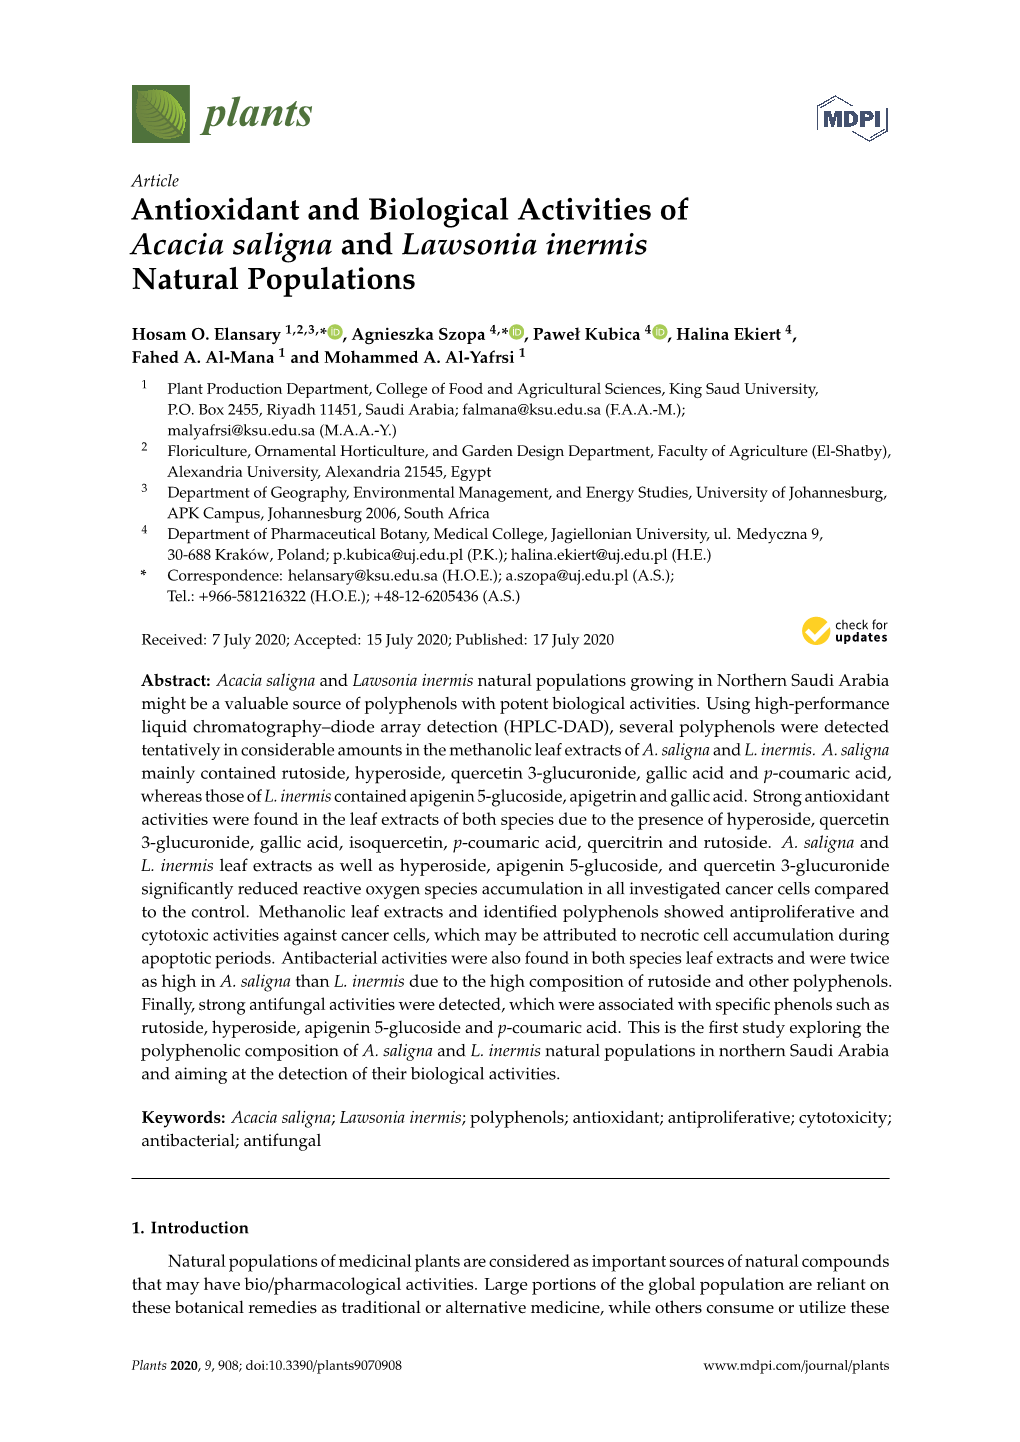 Antioxidant and Biological Activities of Acacia Saligna and Lawsonia Inermis Natural Populations